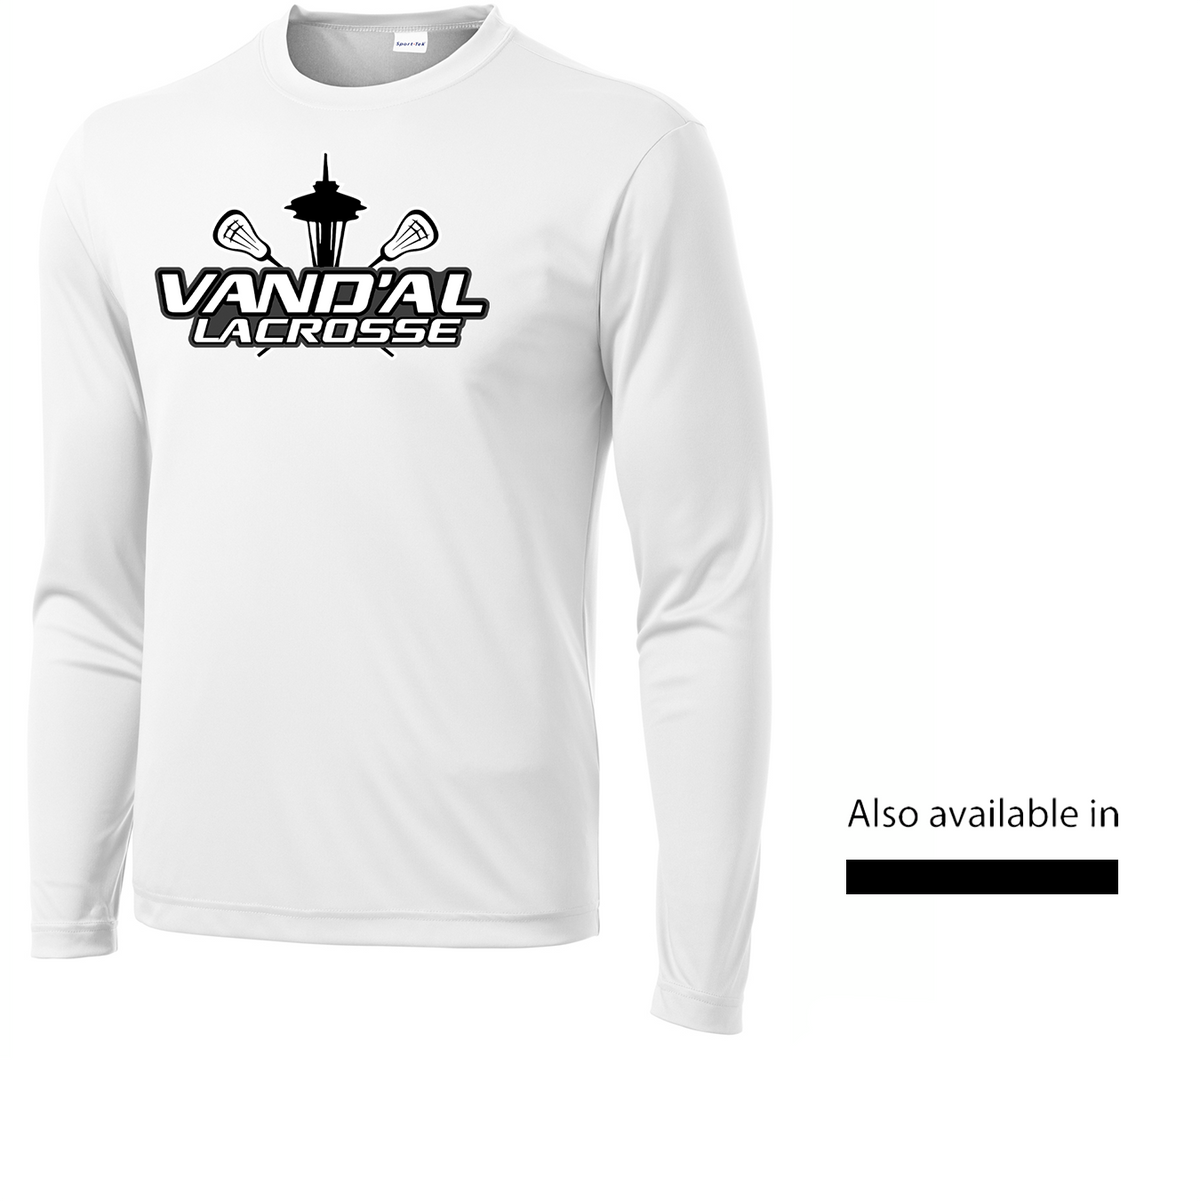 Vand'al Lacrosse Long Sleeve Performance Shirt